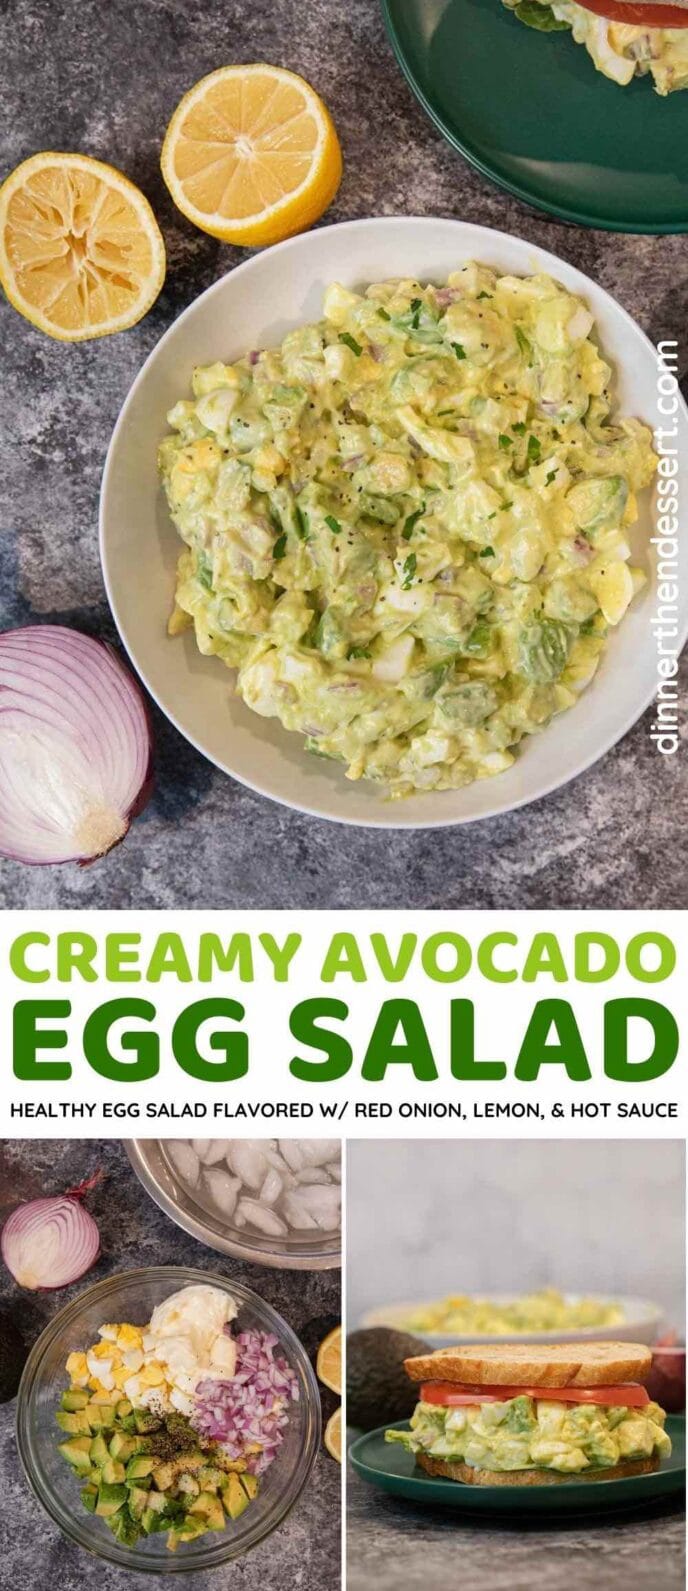 Avocado Egg Salad collage